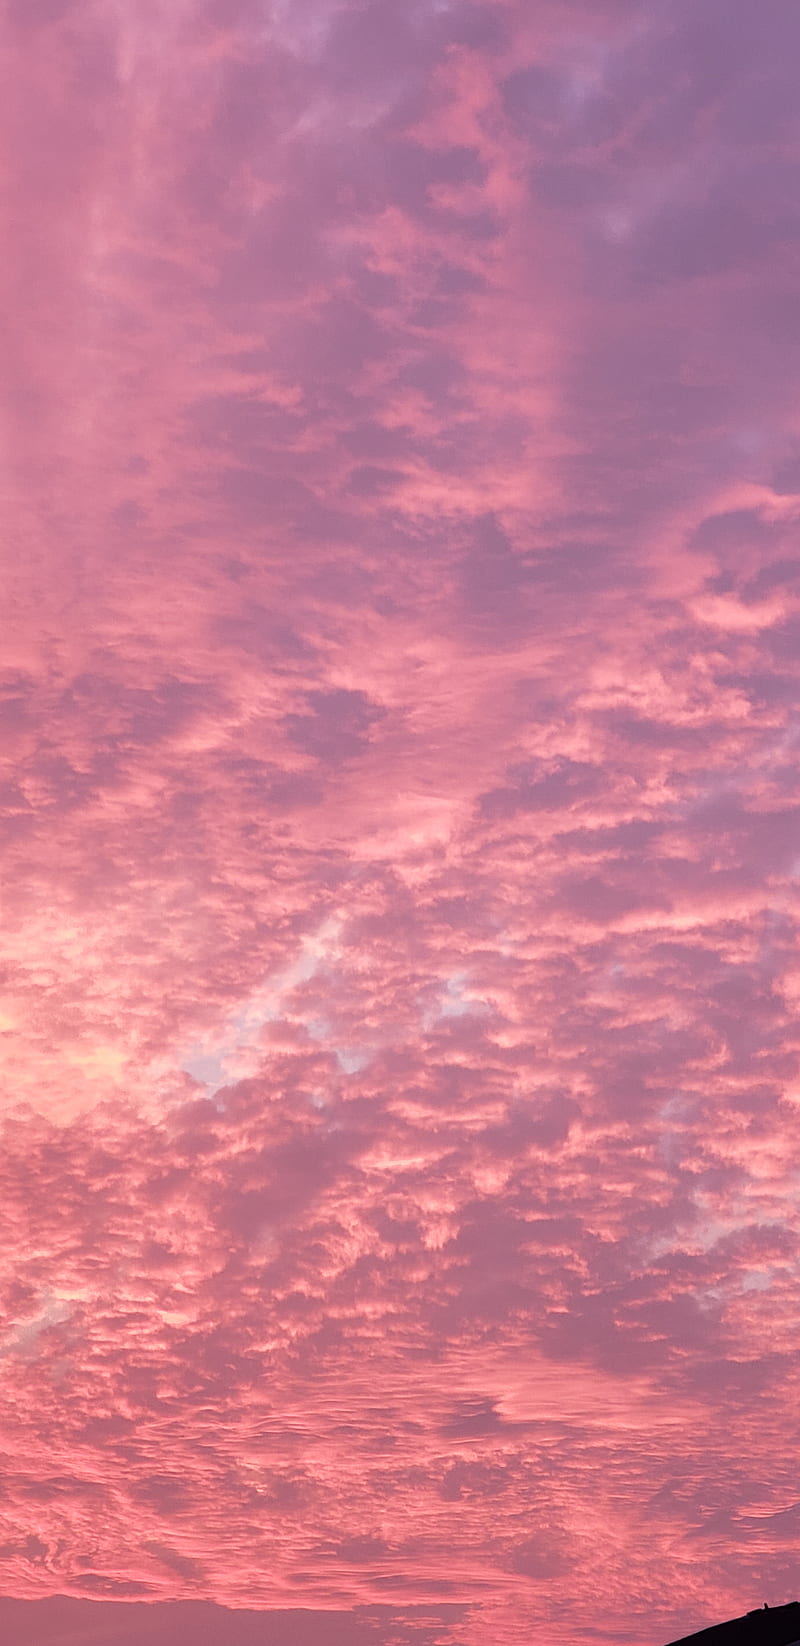 500 Pink Sky Pictures  Download Free Images on Unsplash